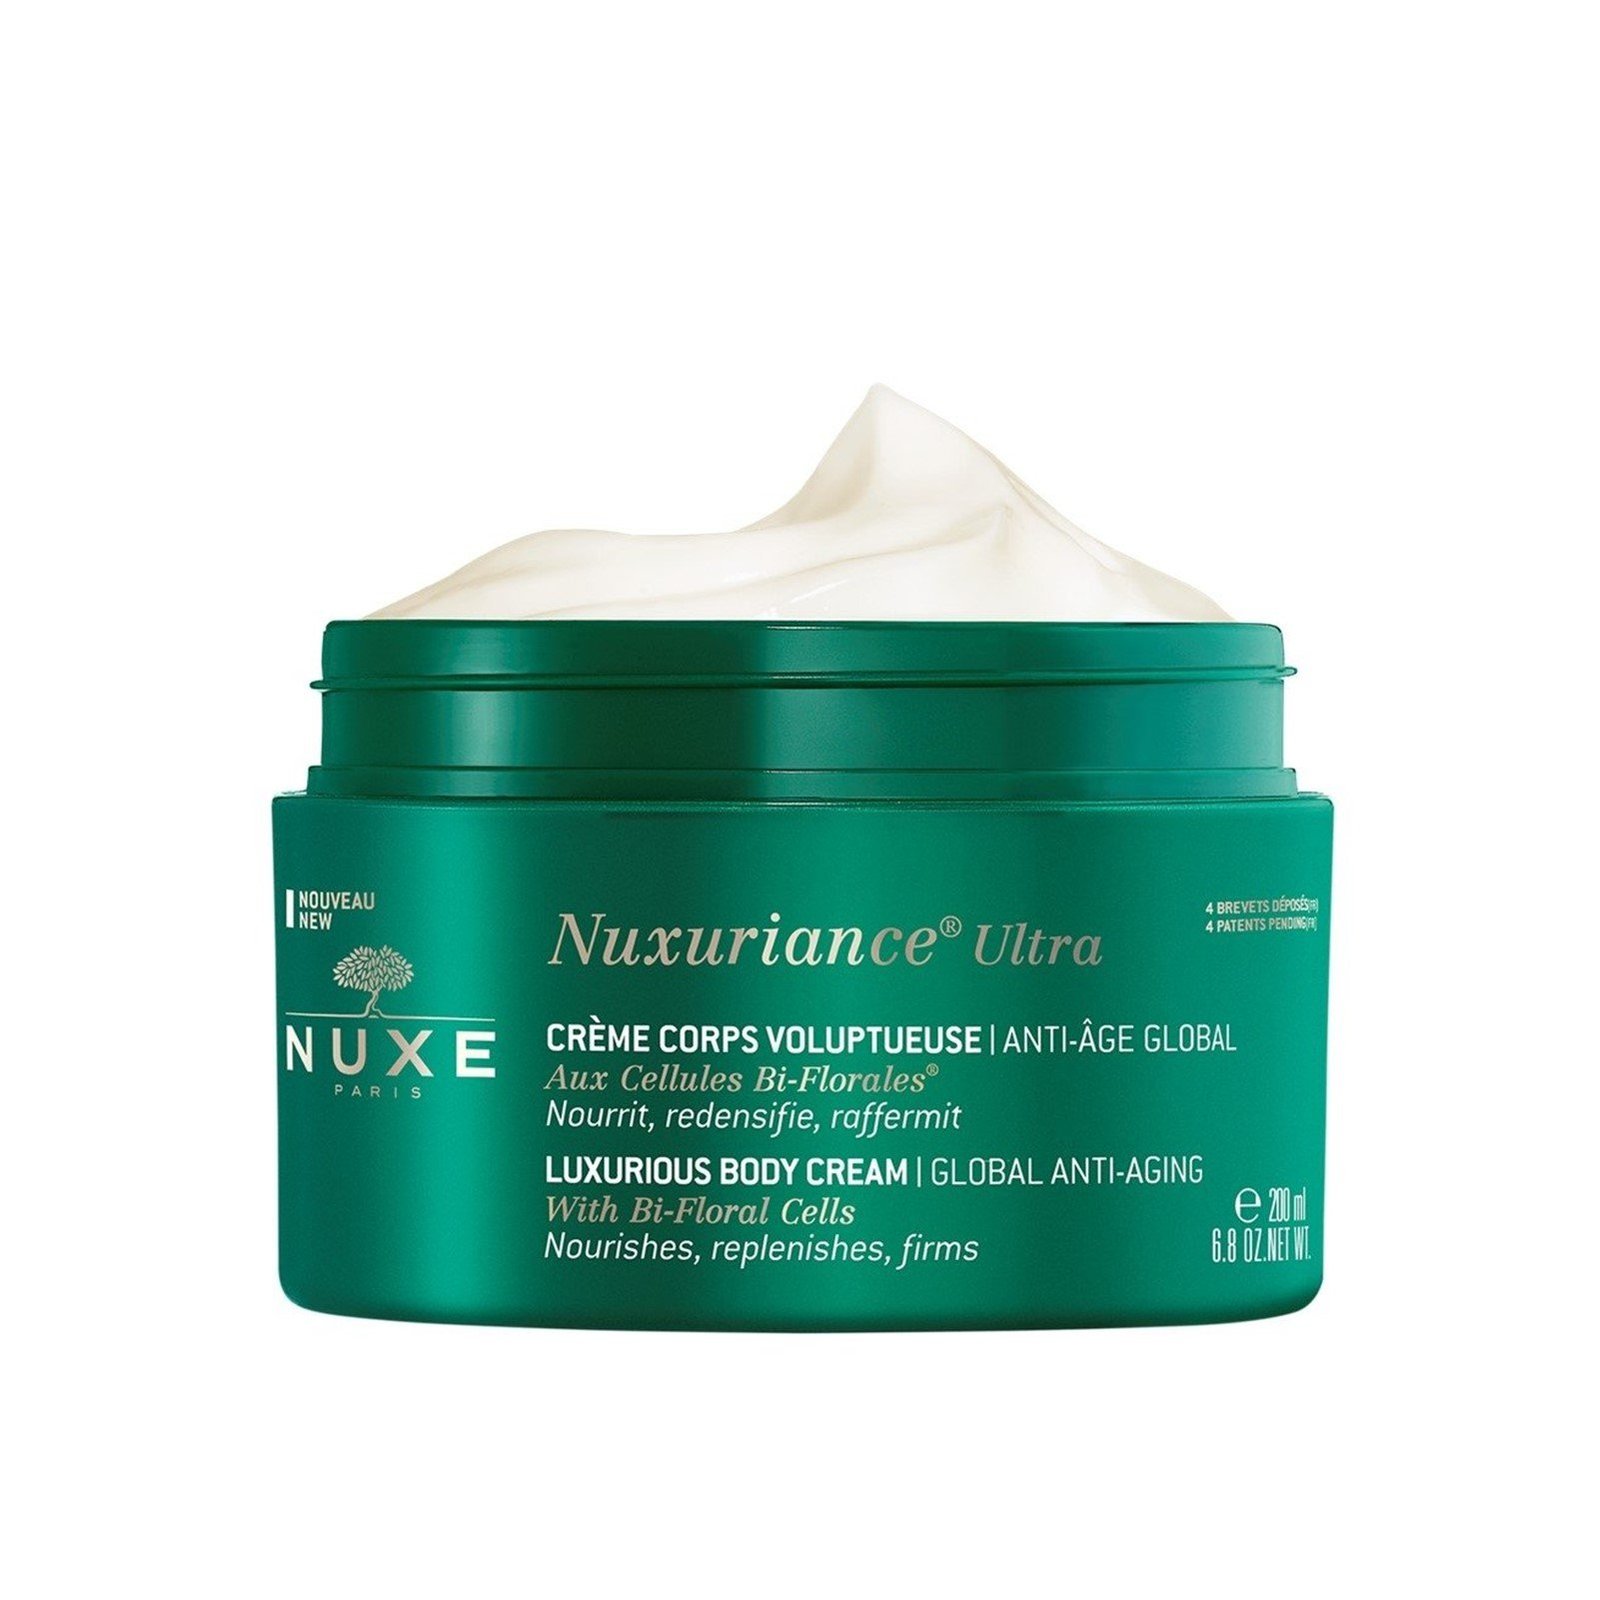 NUXE Nuxuriance Ultra Luxurious Body Cream Global Anti-Aging 200ml